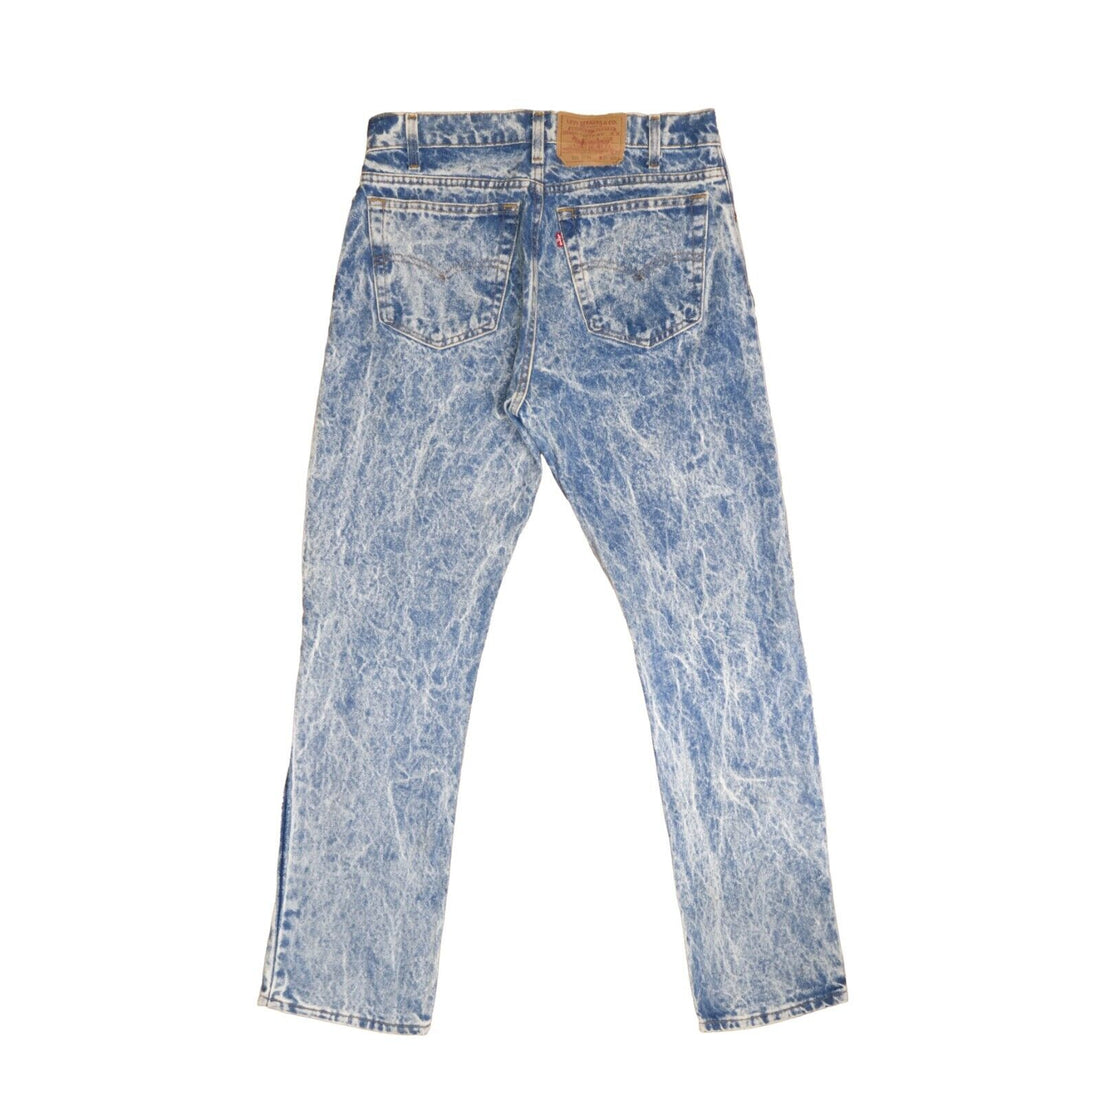 Vintage Levi Strauss & Co Acid Wash Denim Jeans Size 34 X 32 506 0209